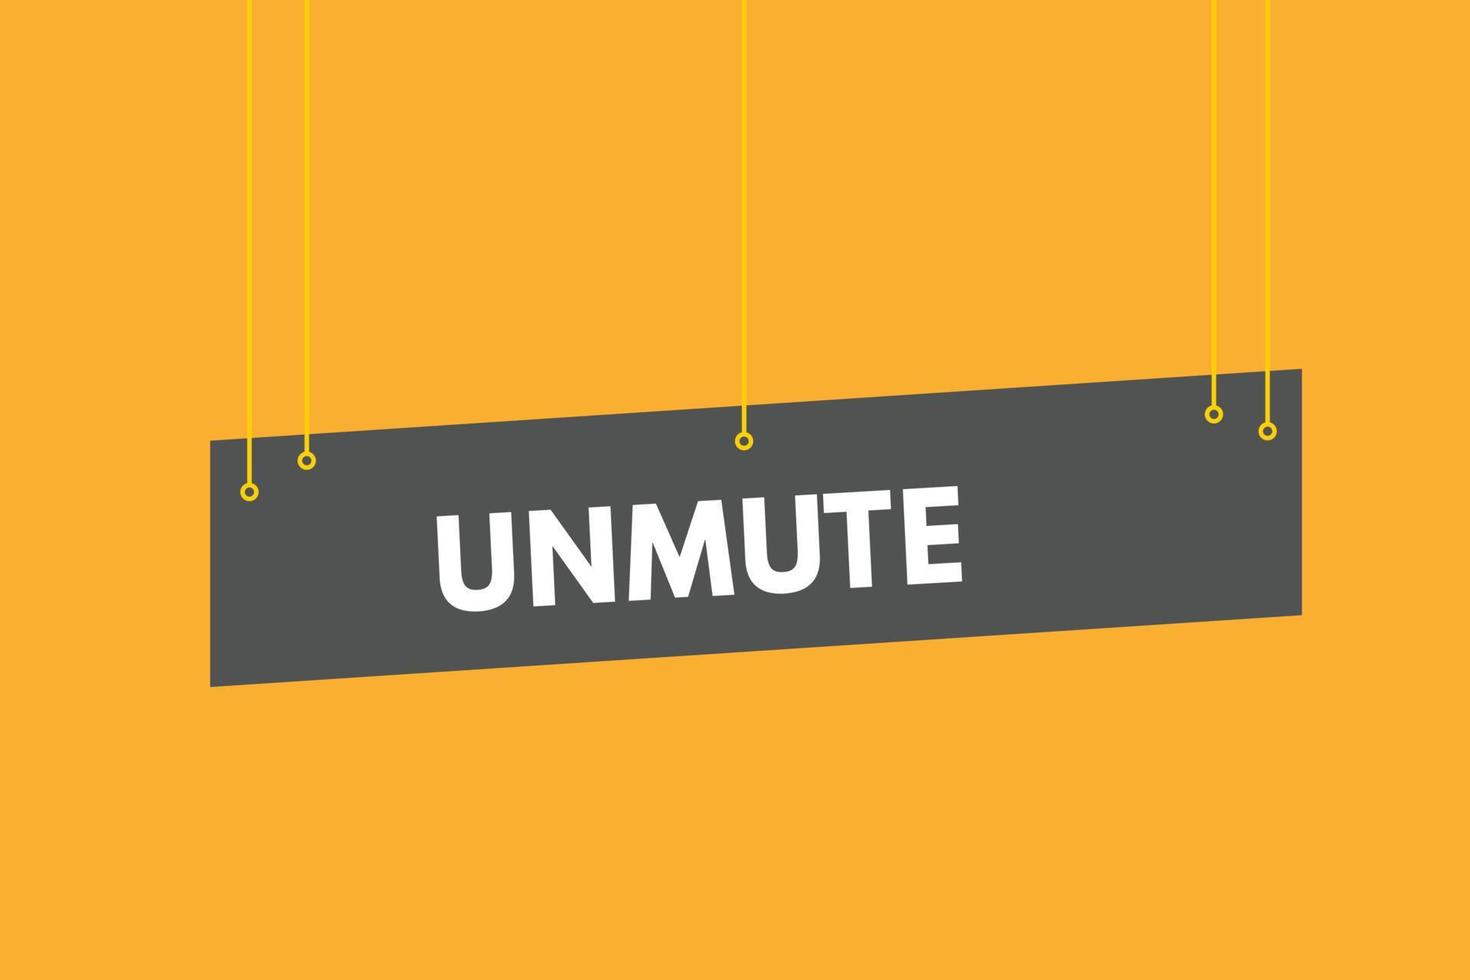 unmute text Button. unmute Sign Icon Label Sticker Web Buttons vector